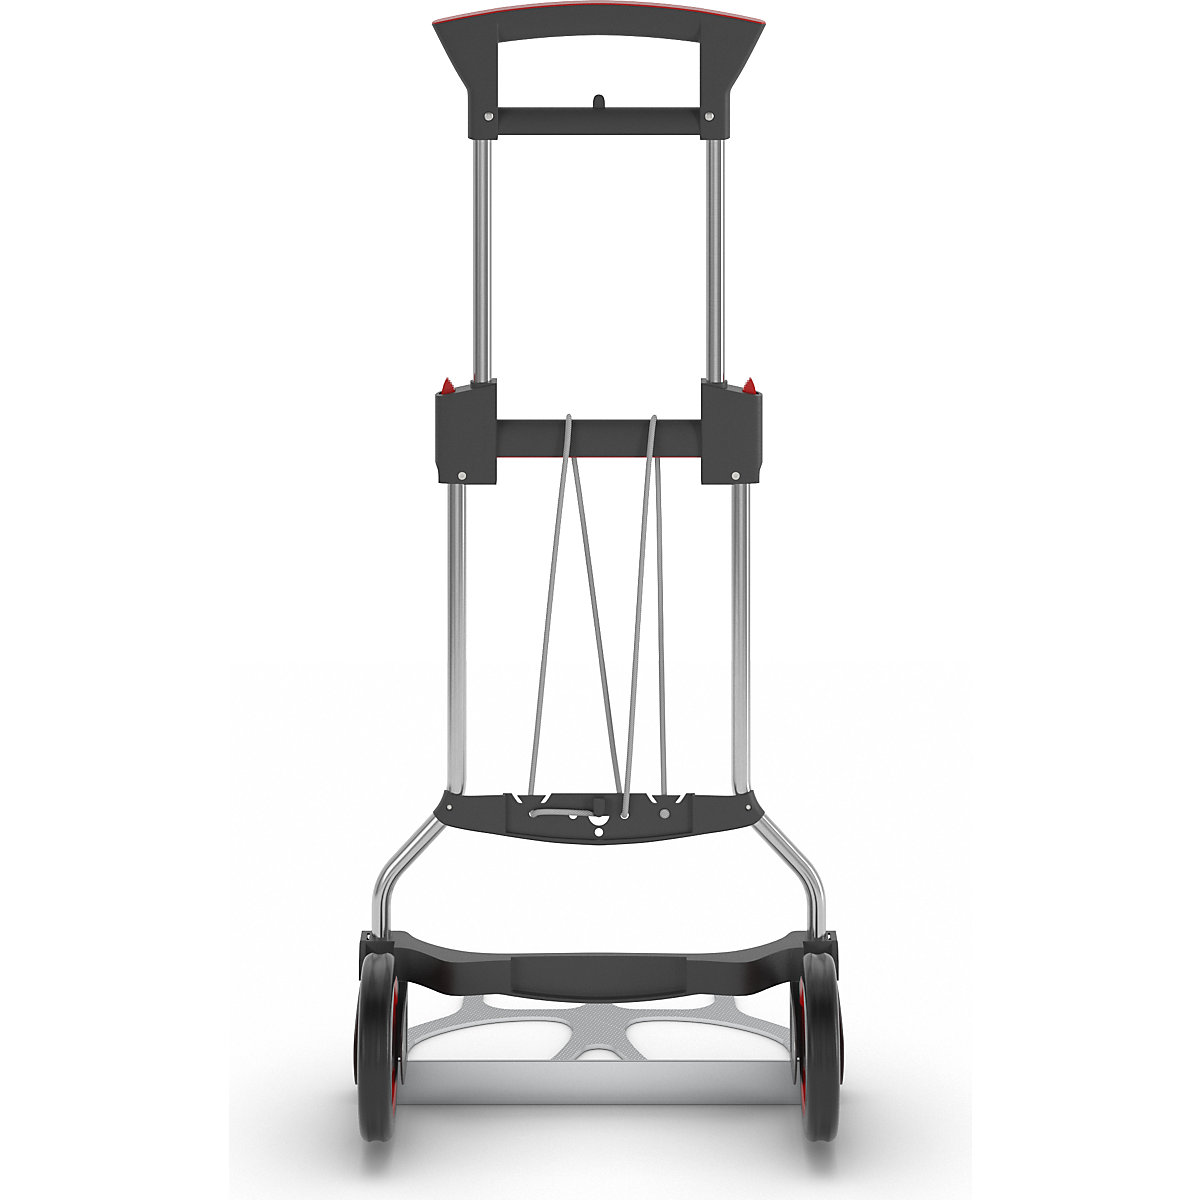 Profesionalna kolica za prijevoz vreća, sklopiva – RuXXac (Prikaz proizvoda 4)-3